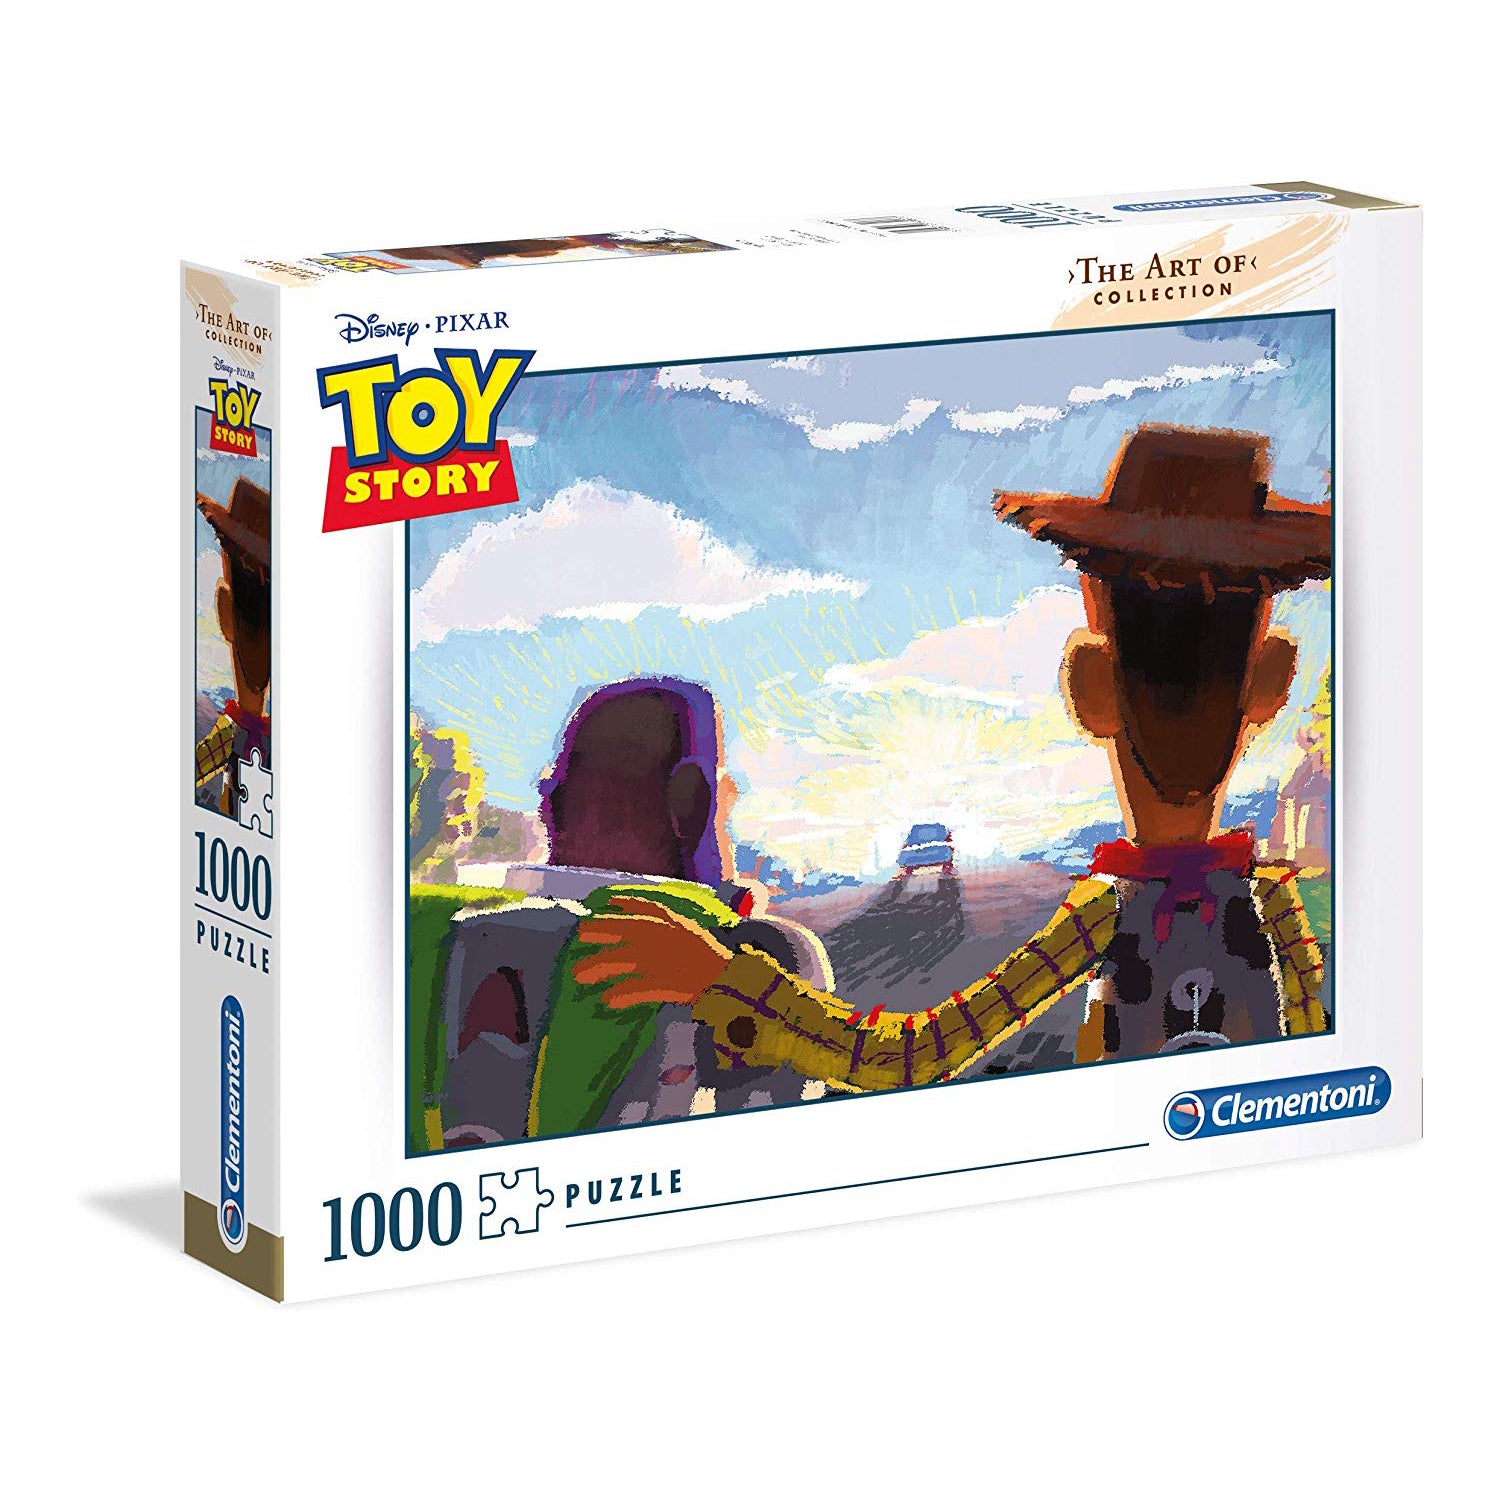 Toy Story - Clementoni 1000pce